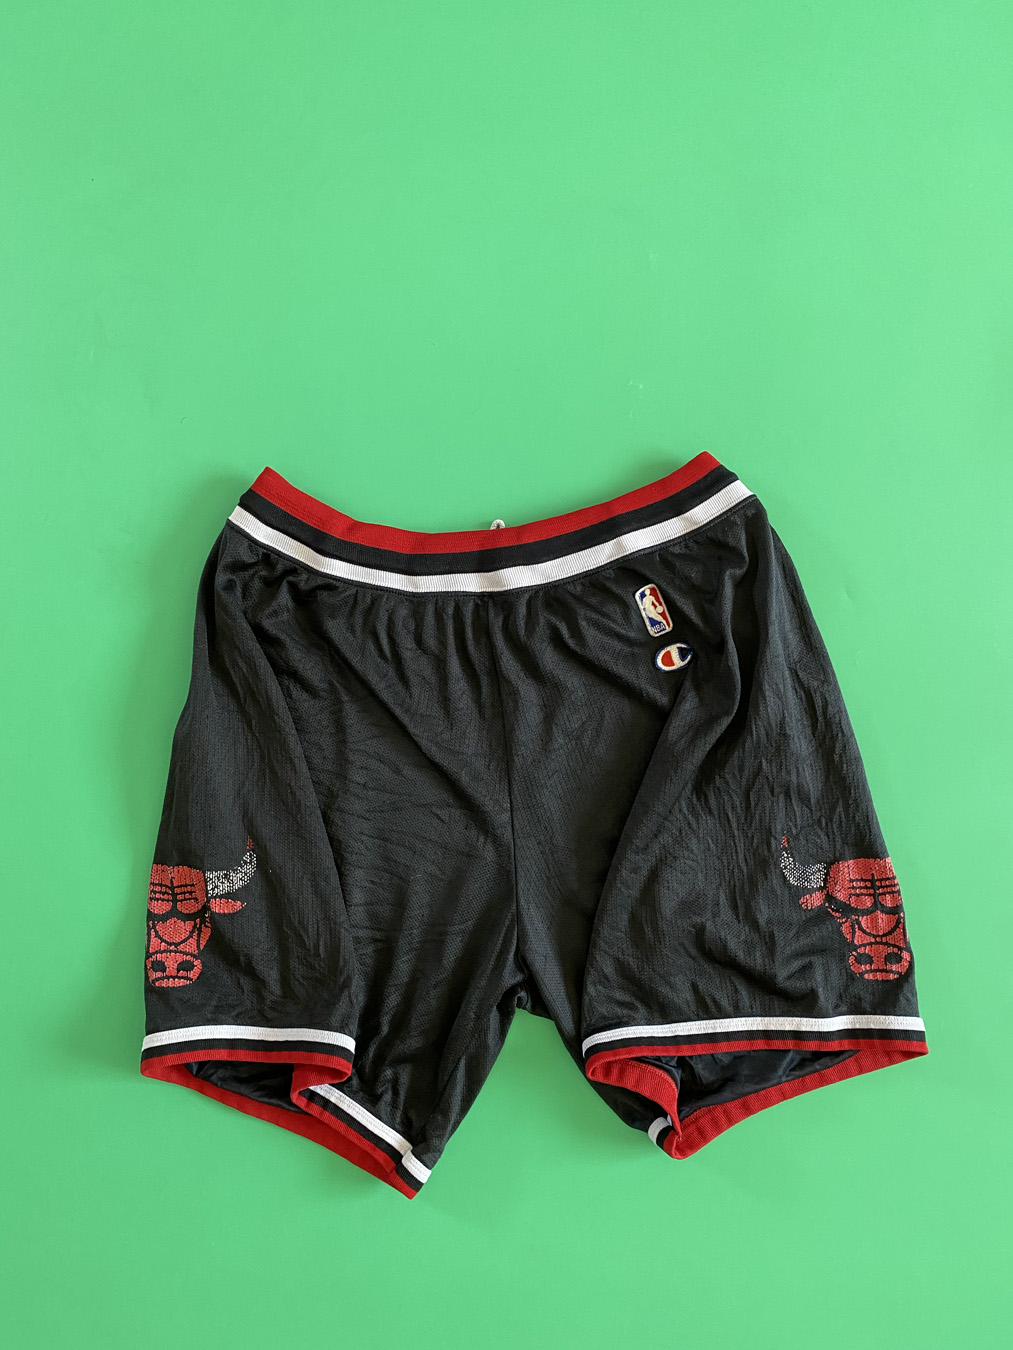 Chicago Bulls Vintage 90s Champion Black Basketball Shorts 